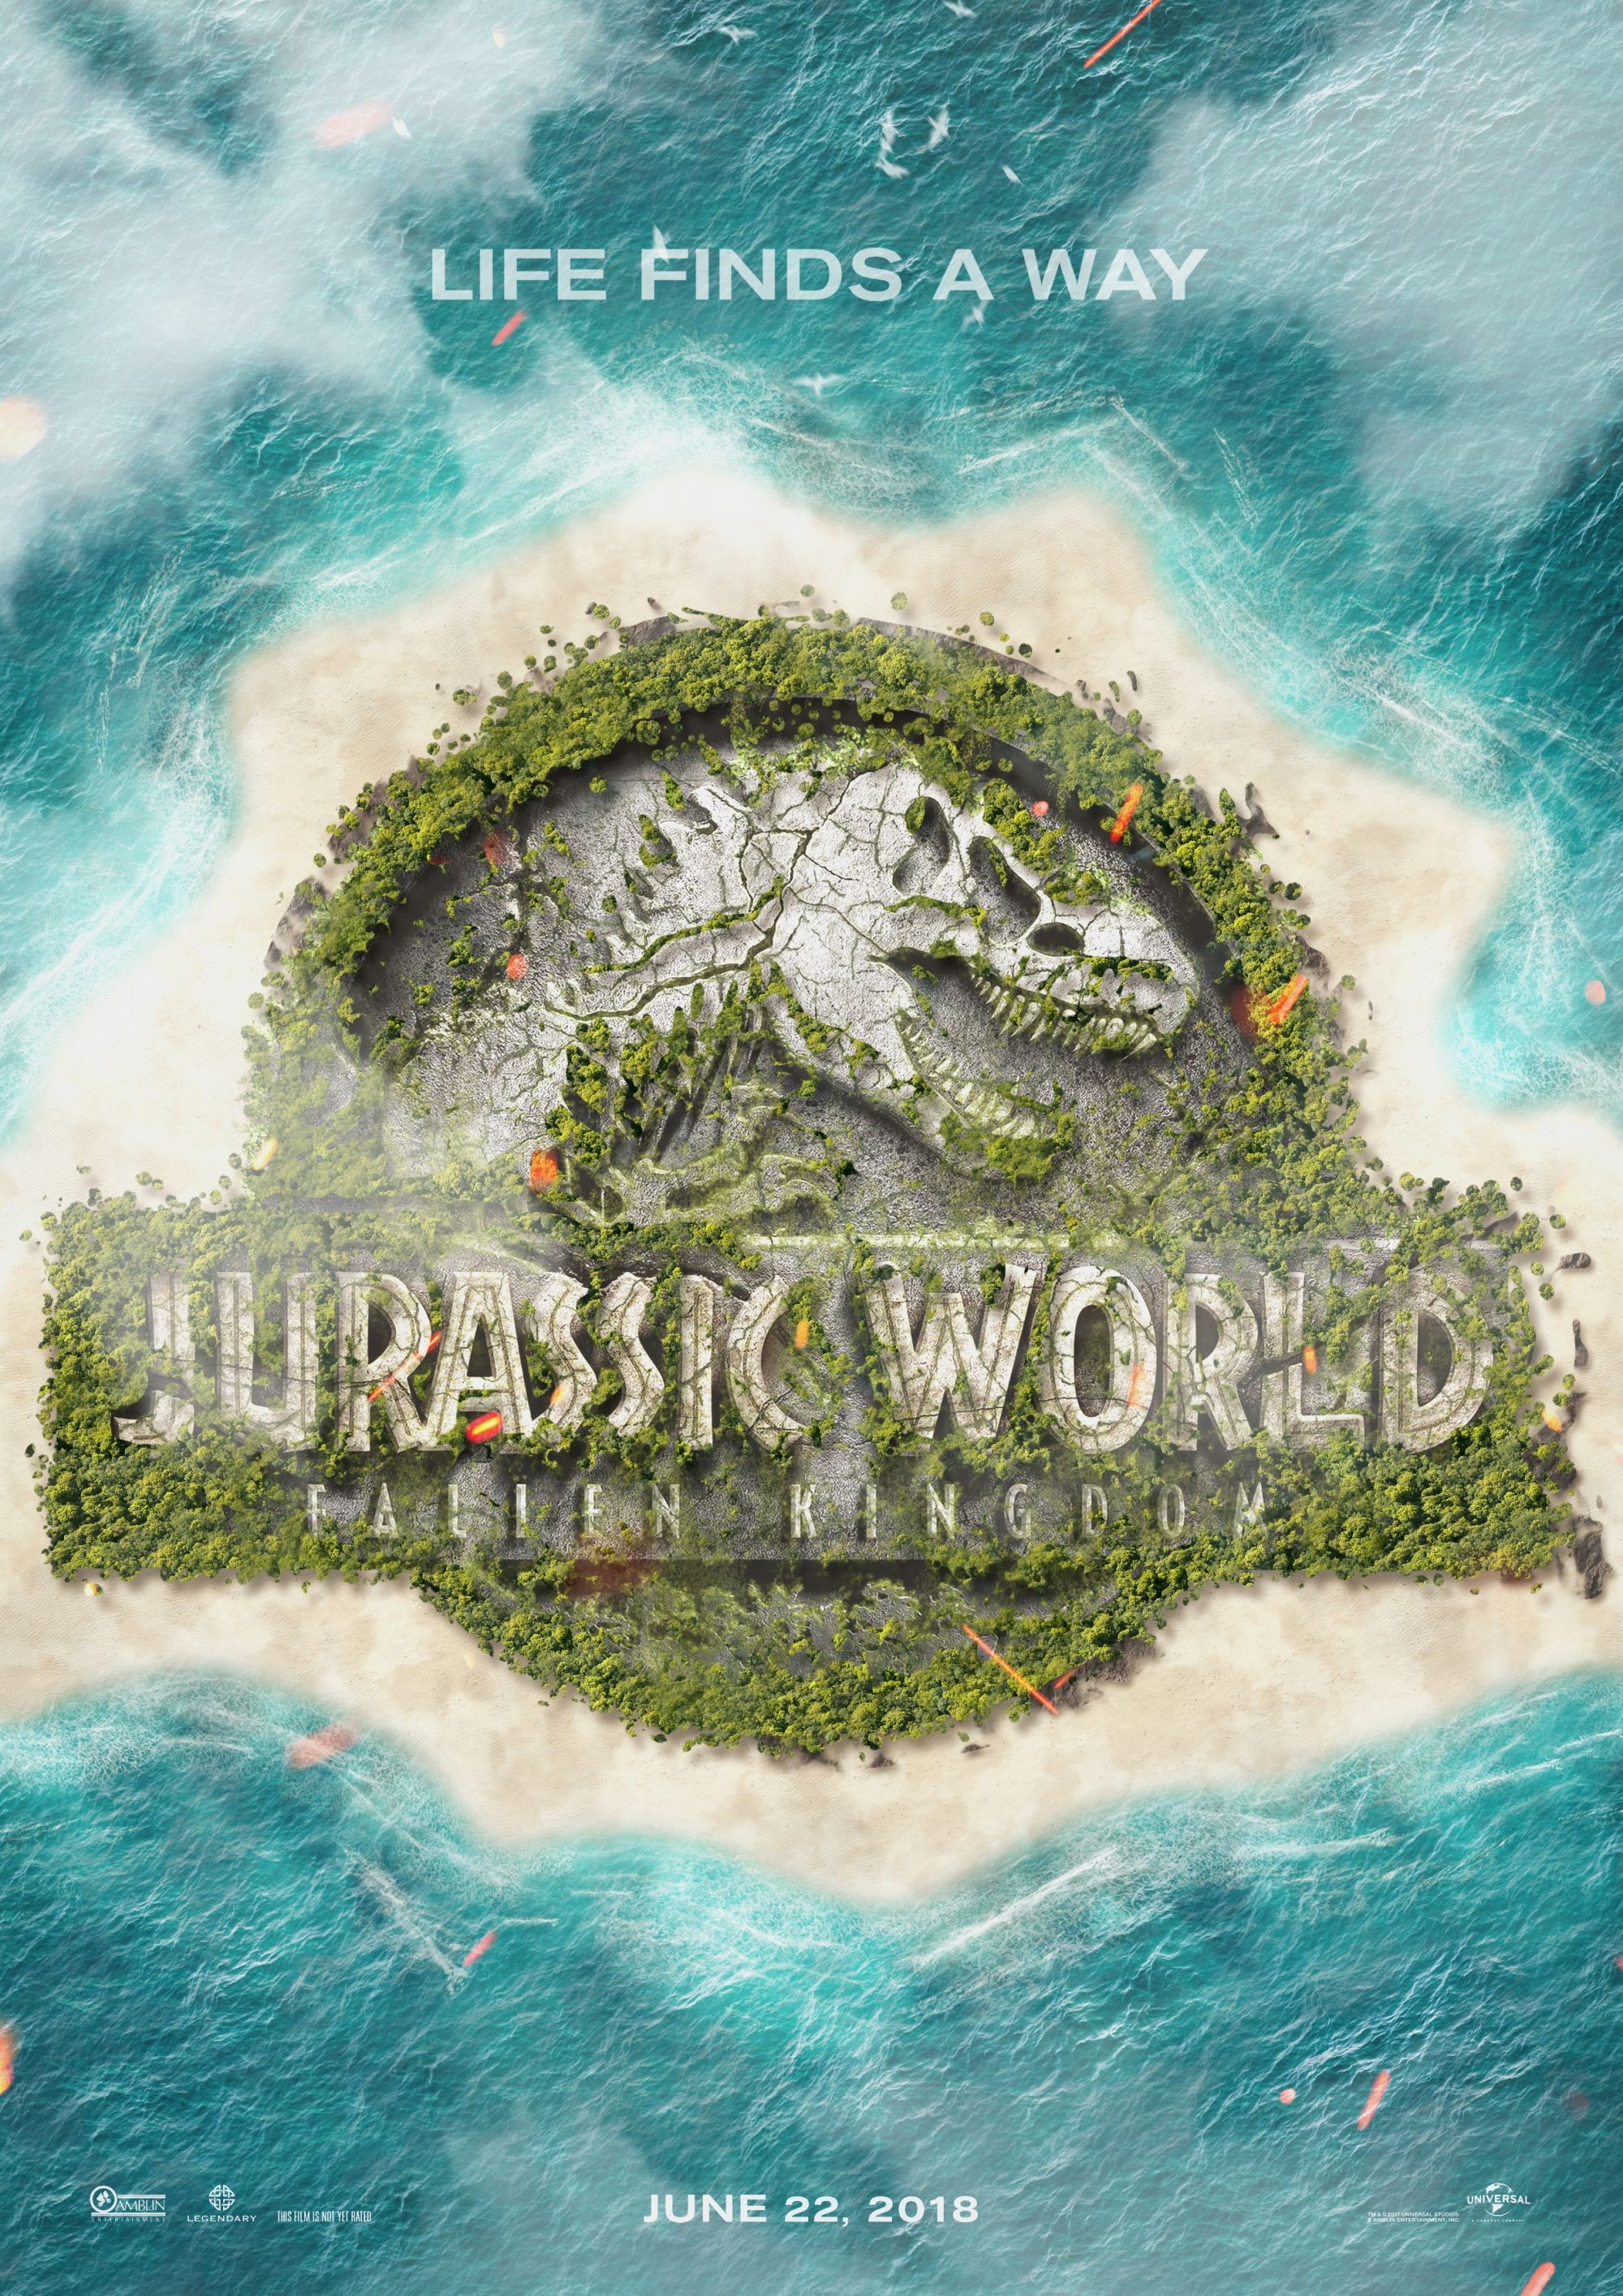 Jurassic World: Fallen Kingdom Wallpapers